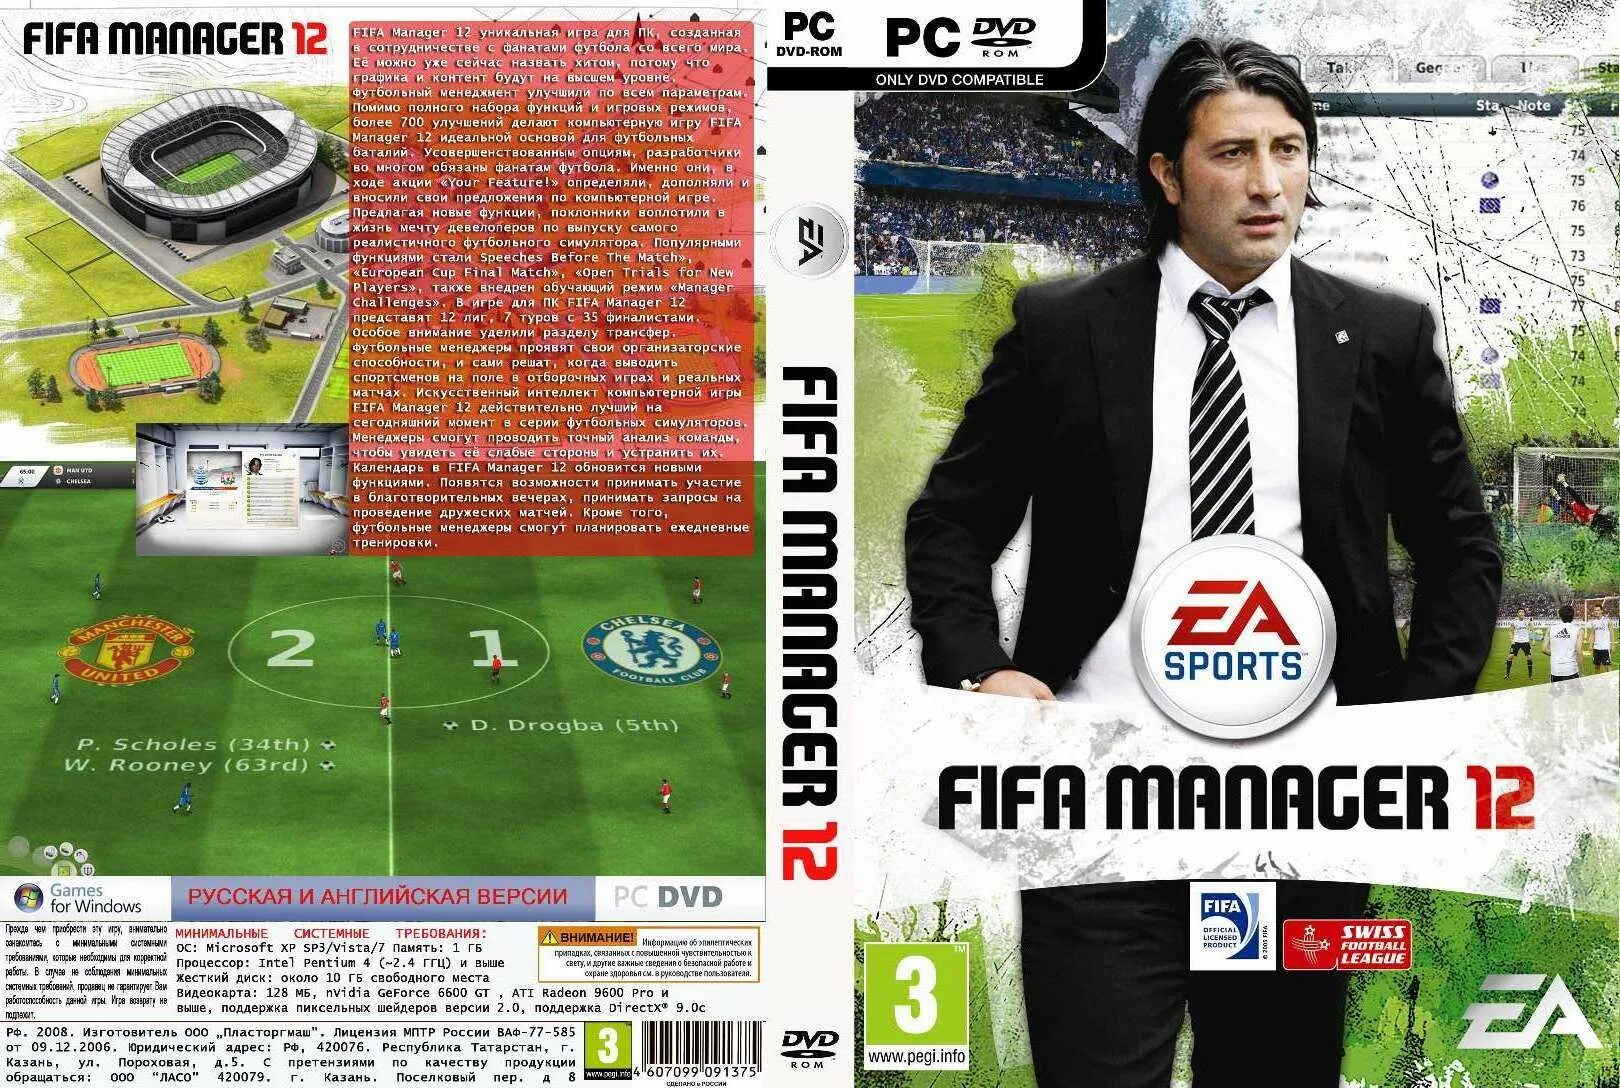 ФИФА менеджер 12 / FIFA Manager 12. ФИФА менеджер 2006. FIFA Manager 1988 футбольного менеджера. Игра ФИФА Манагер.